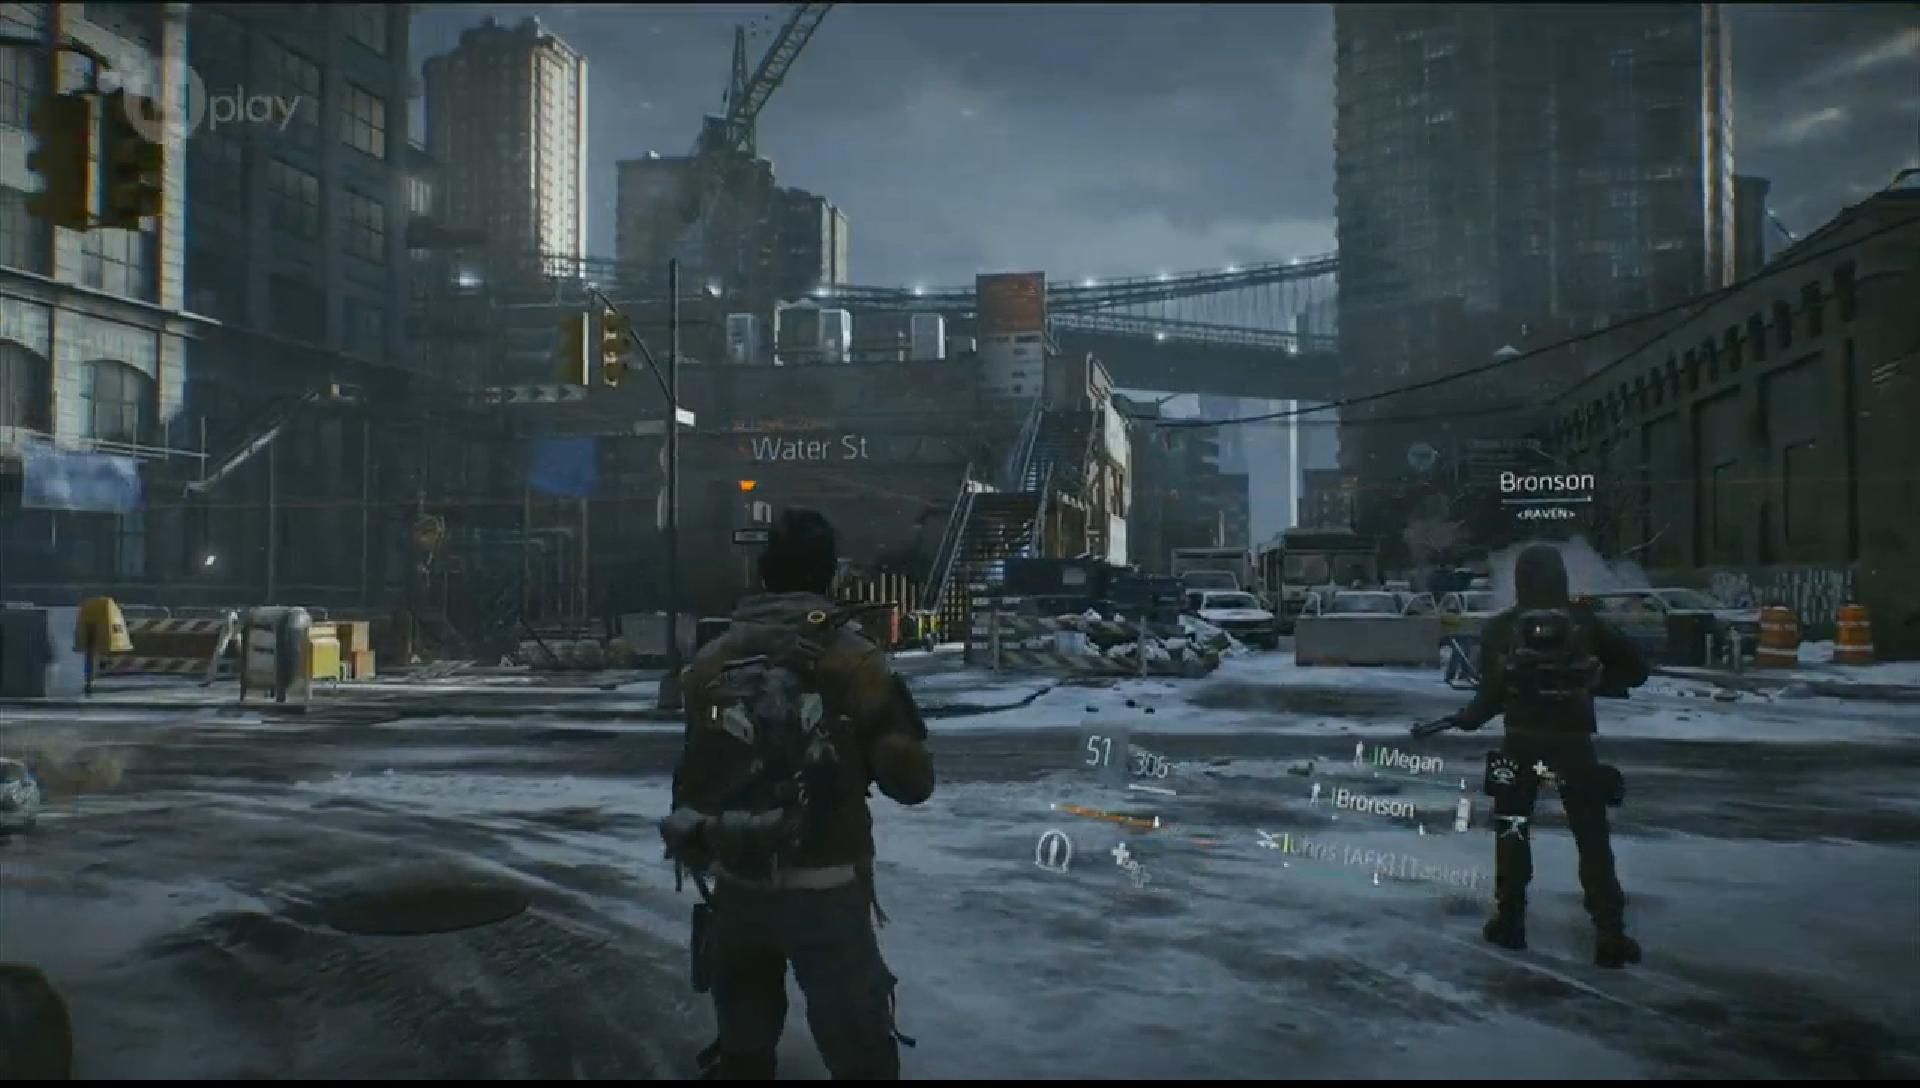 E3 2013 Ubisoft Reveals Tom Clancys The Division, a Third-Person MMO Shooter